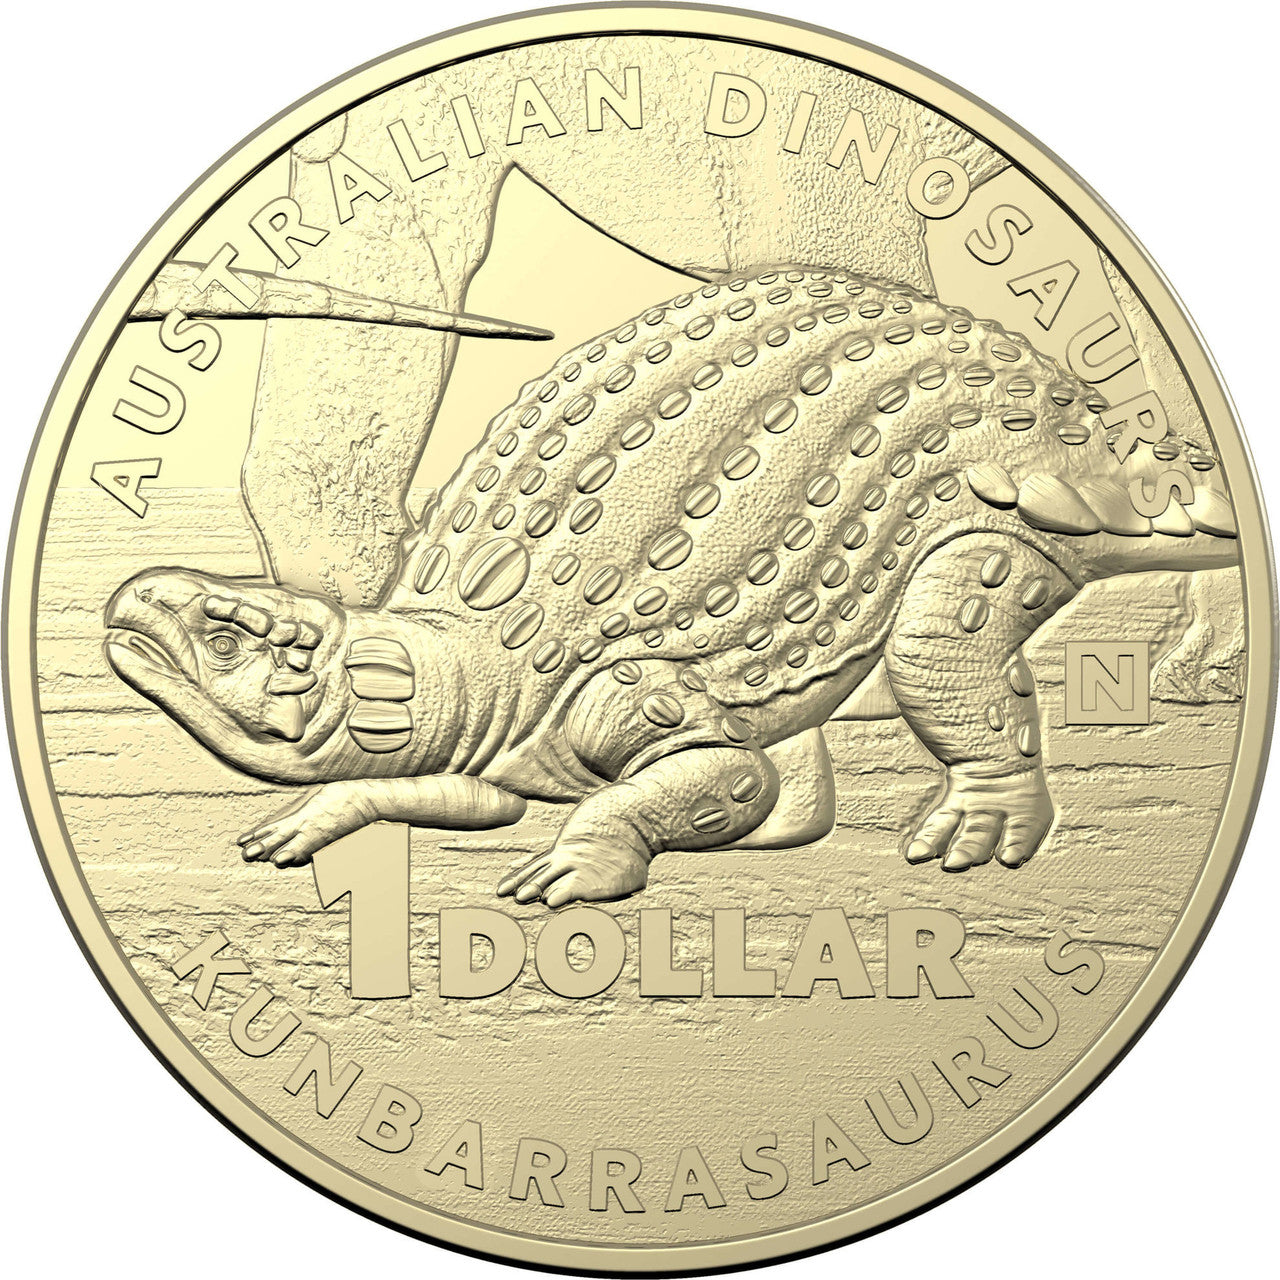 Australian Dinosaurs 2022 Uncirculated Privy Mark Four-Coin Collection